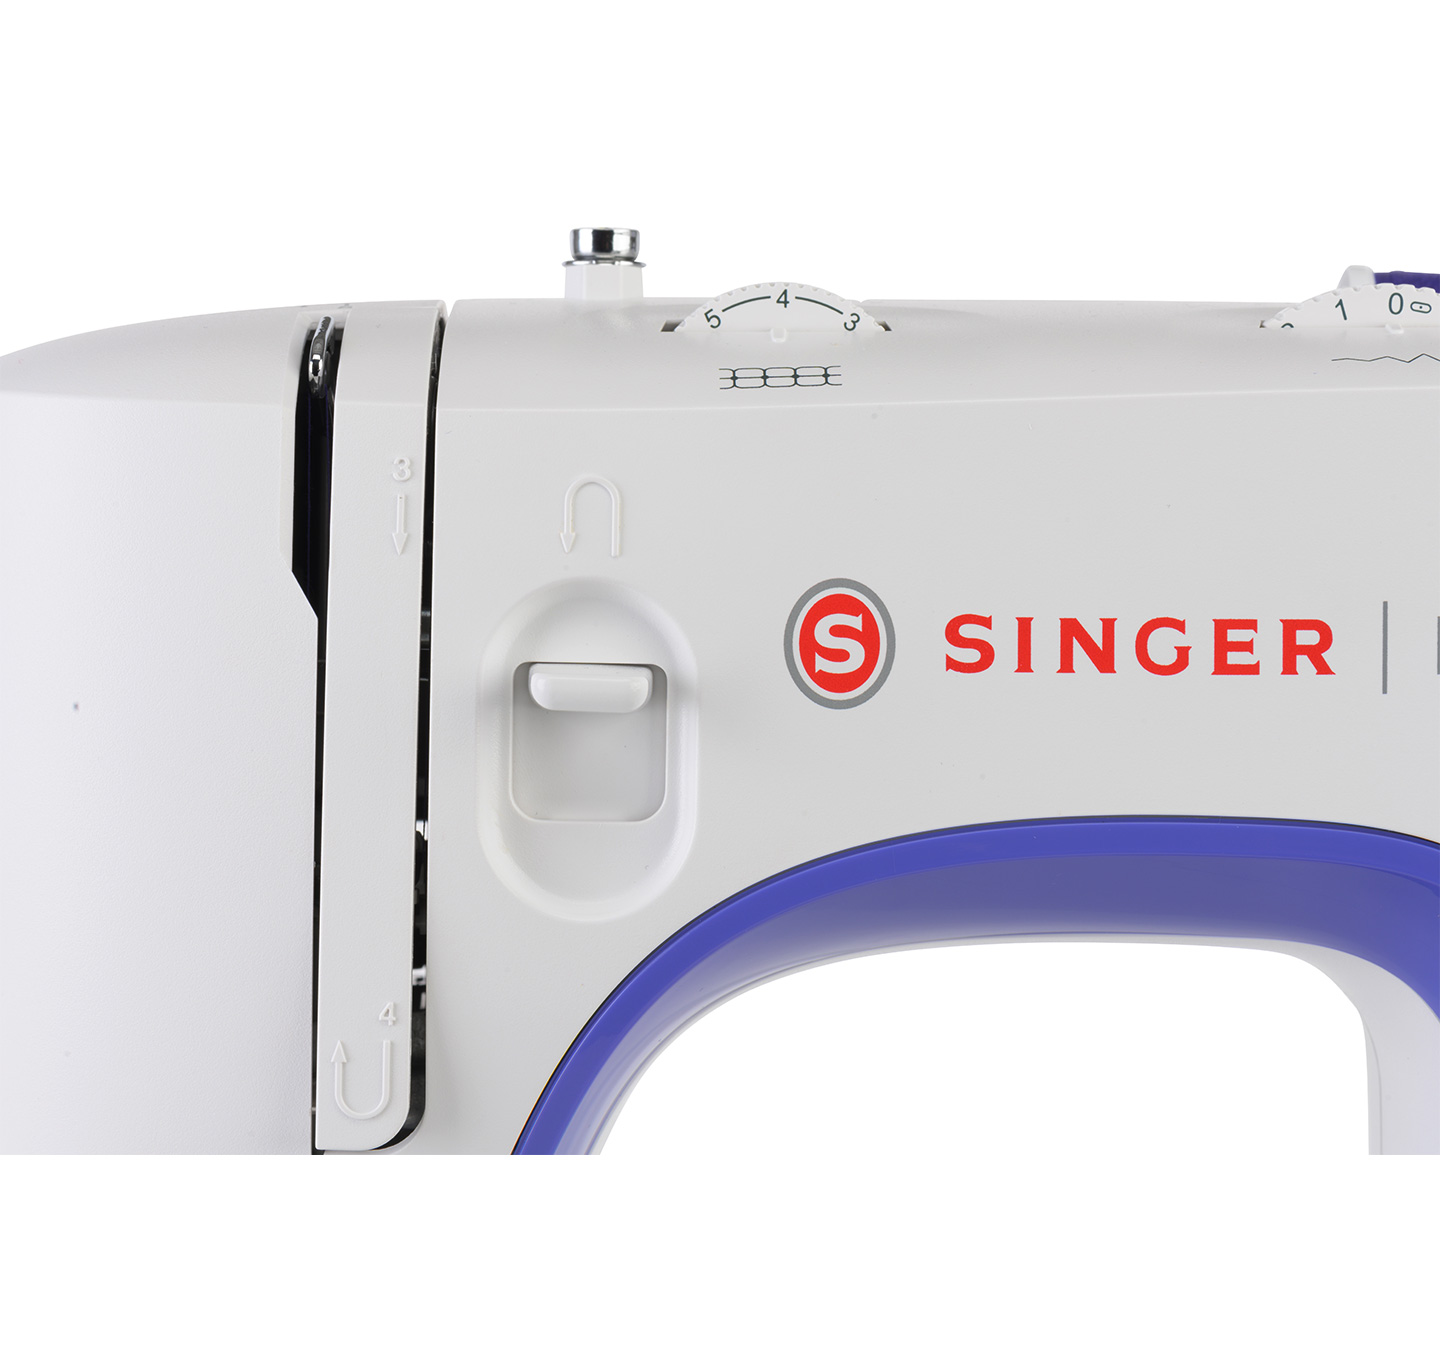 SINGER M3405 < < Sewing Machines Sewing Household Singer Mechanical Machine 